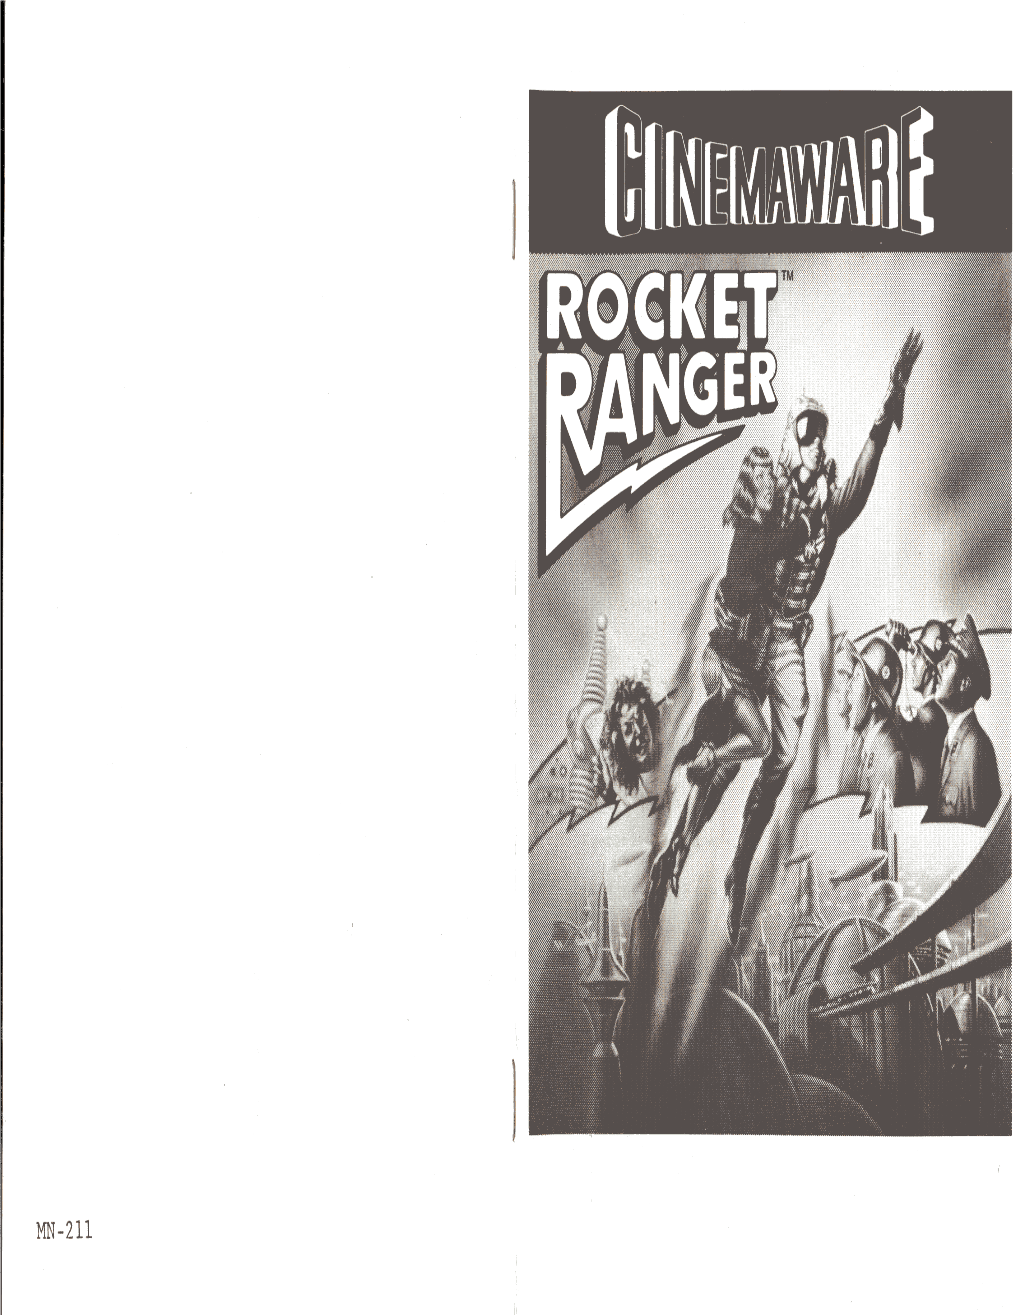 ROCKET Rangerlmis a Trademark of Cinemaware Corporation